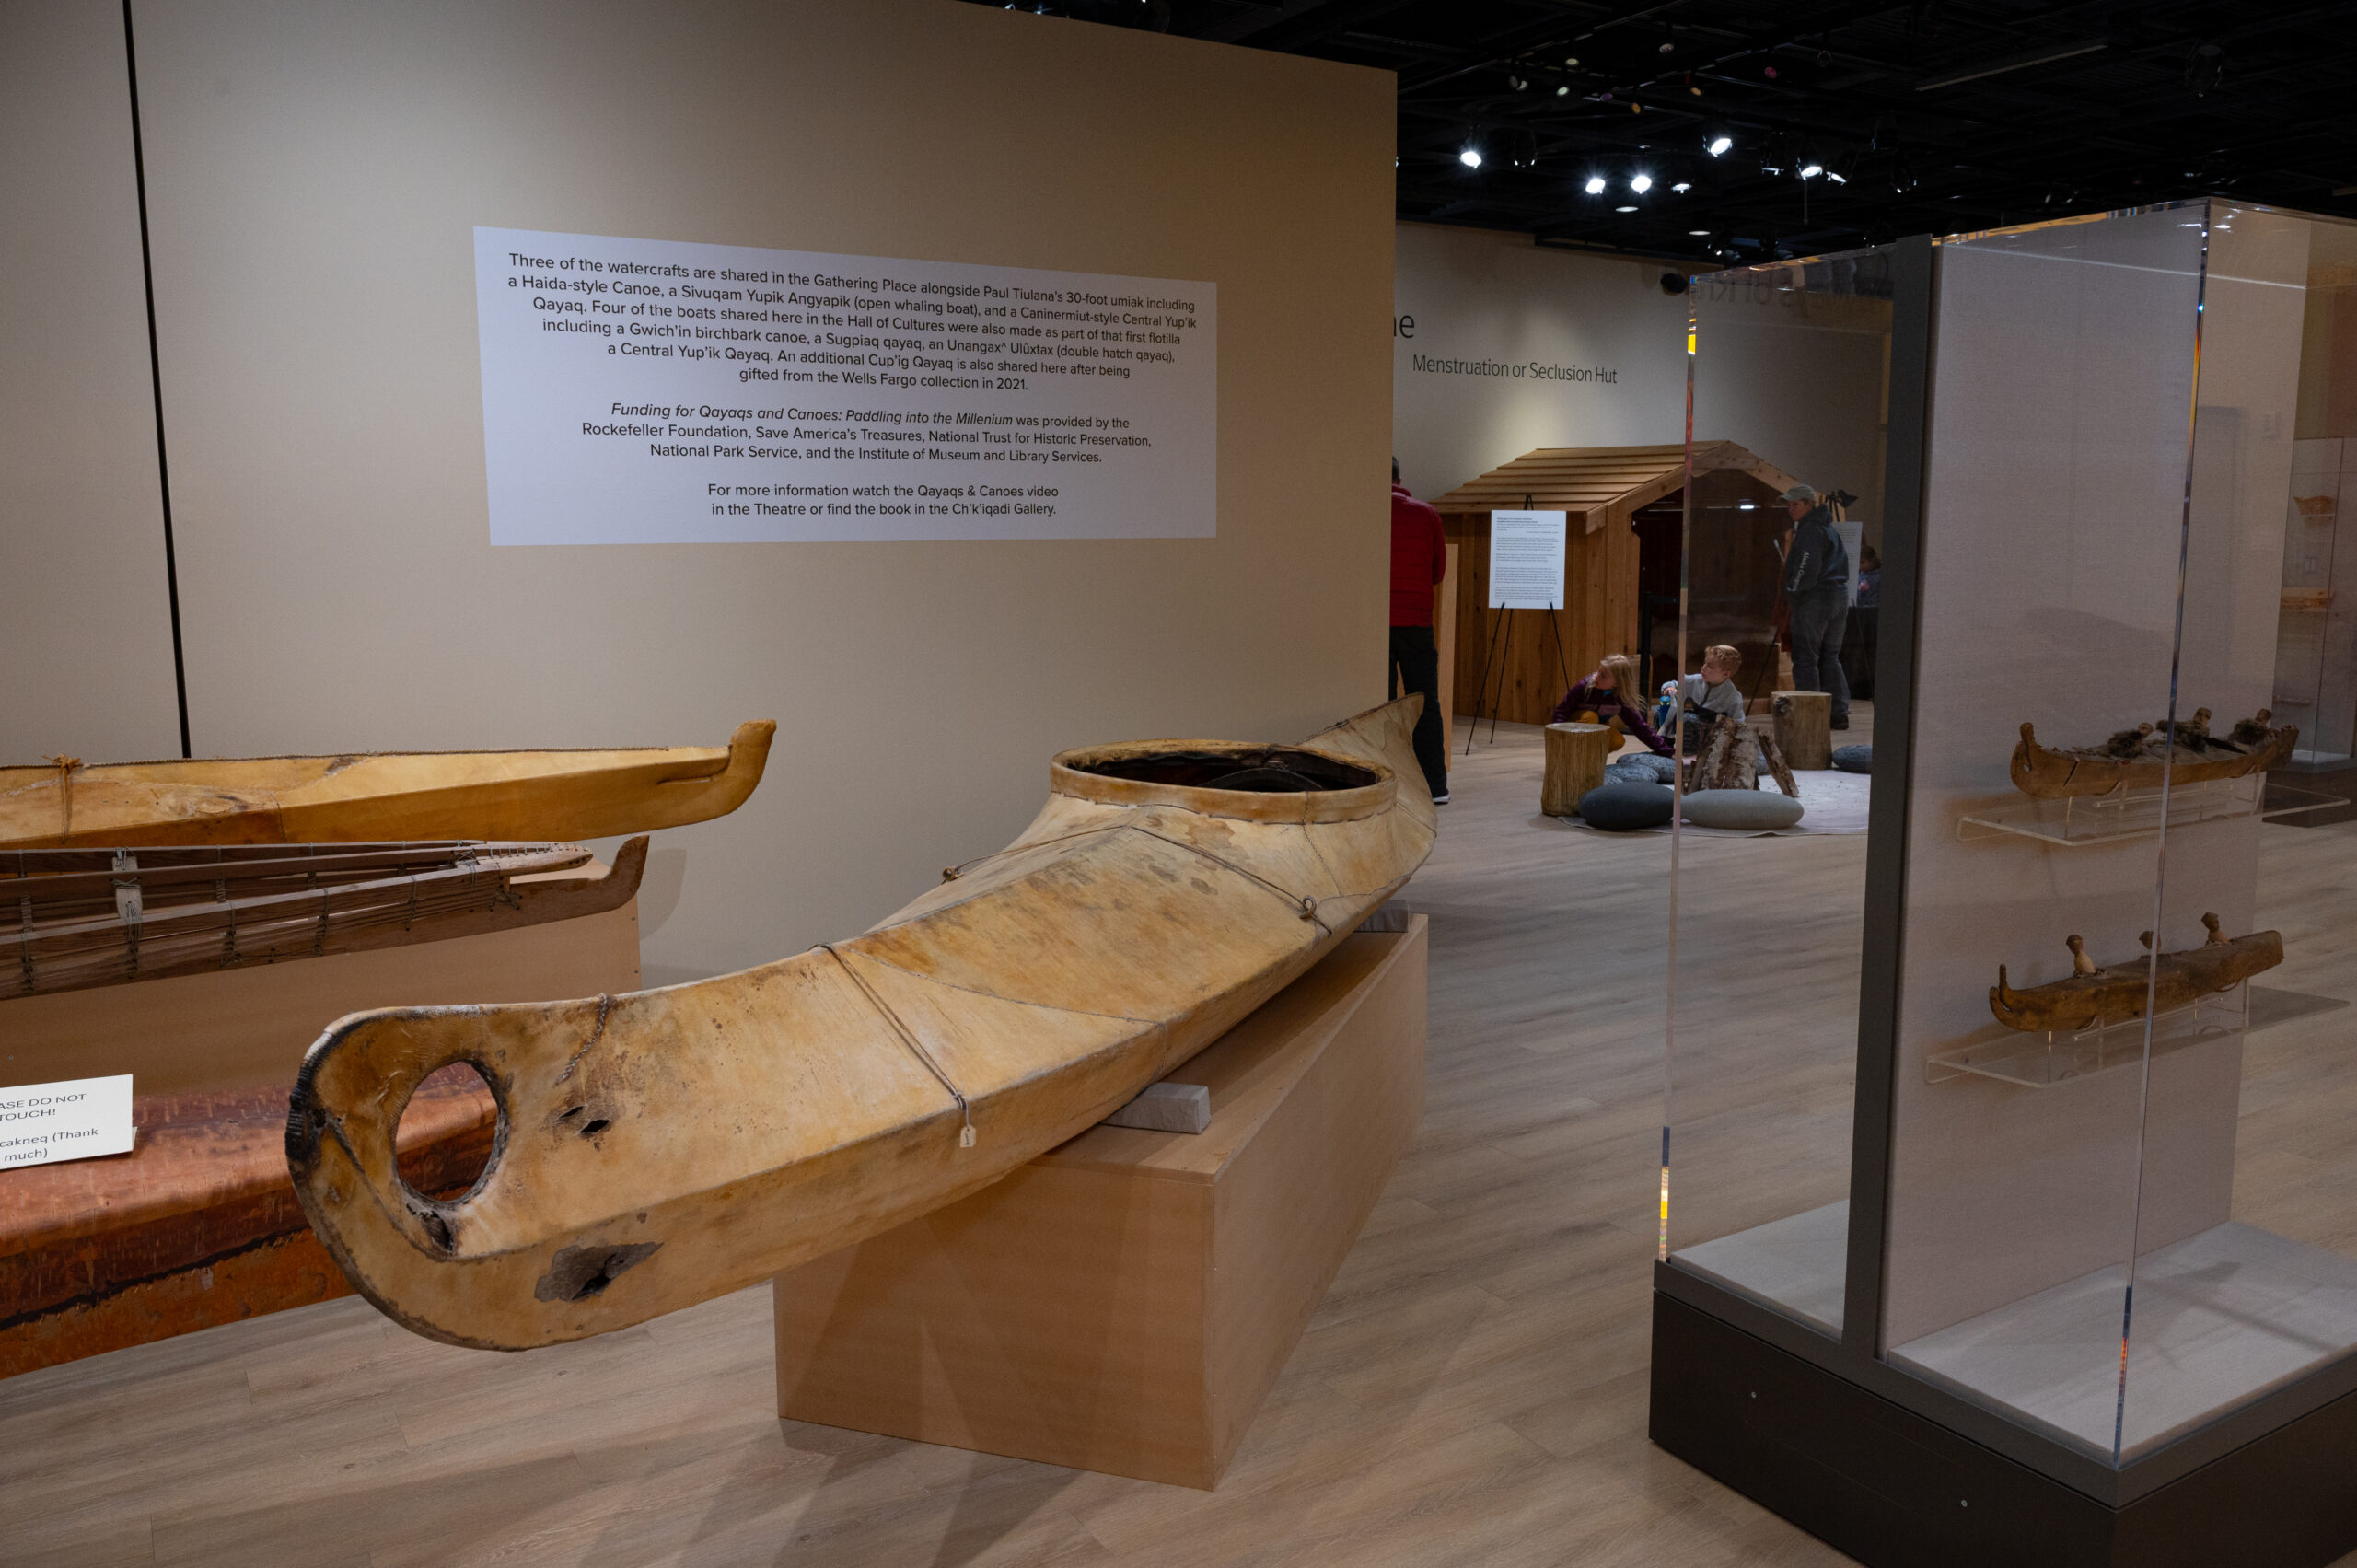 A Qayaq and Canoe exhibit.